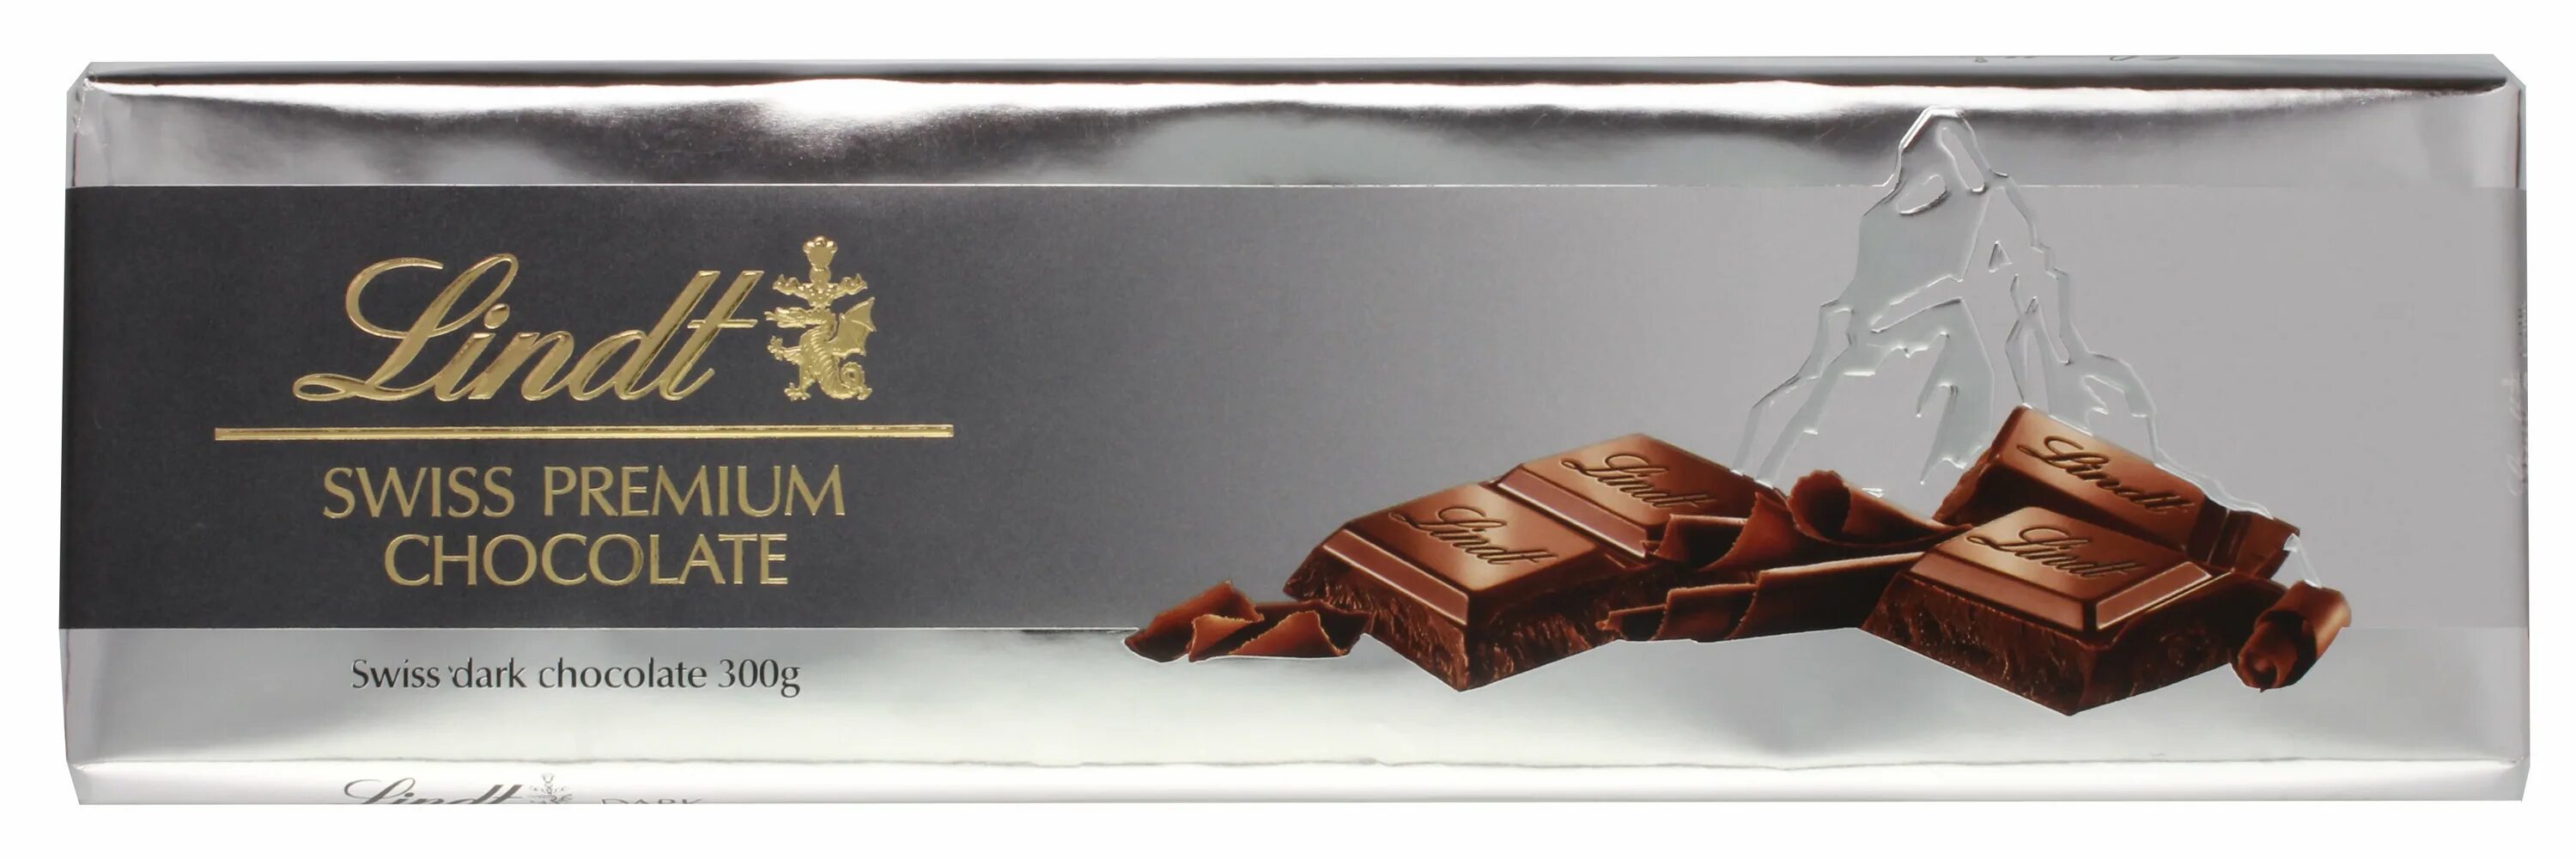 300 шоколада. Swiss Dark шоколад Lindt. Линдт Swiss Premium Chocolate Dark Chocolate. Lindt Swiss Premium Chocolate 300g. Lindt шоколад Swiss Premium Chocolate Dark 300g.